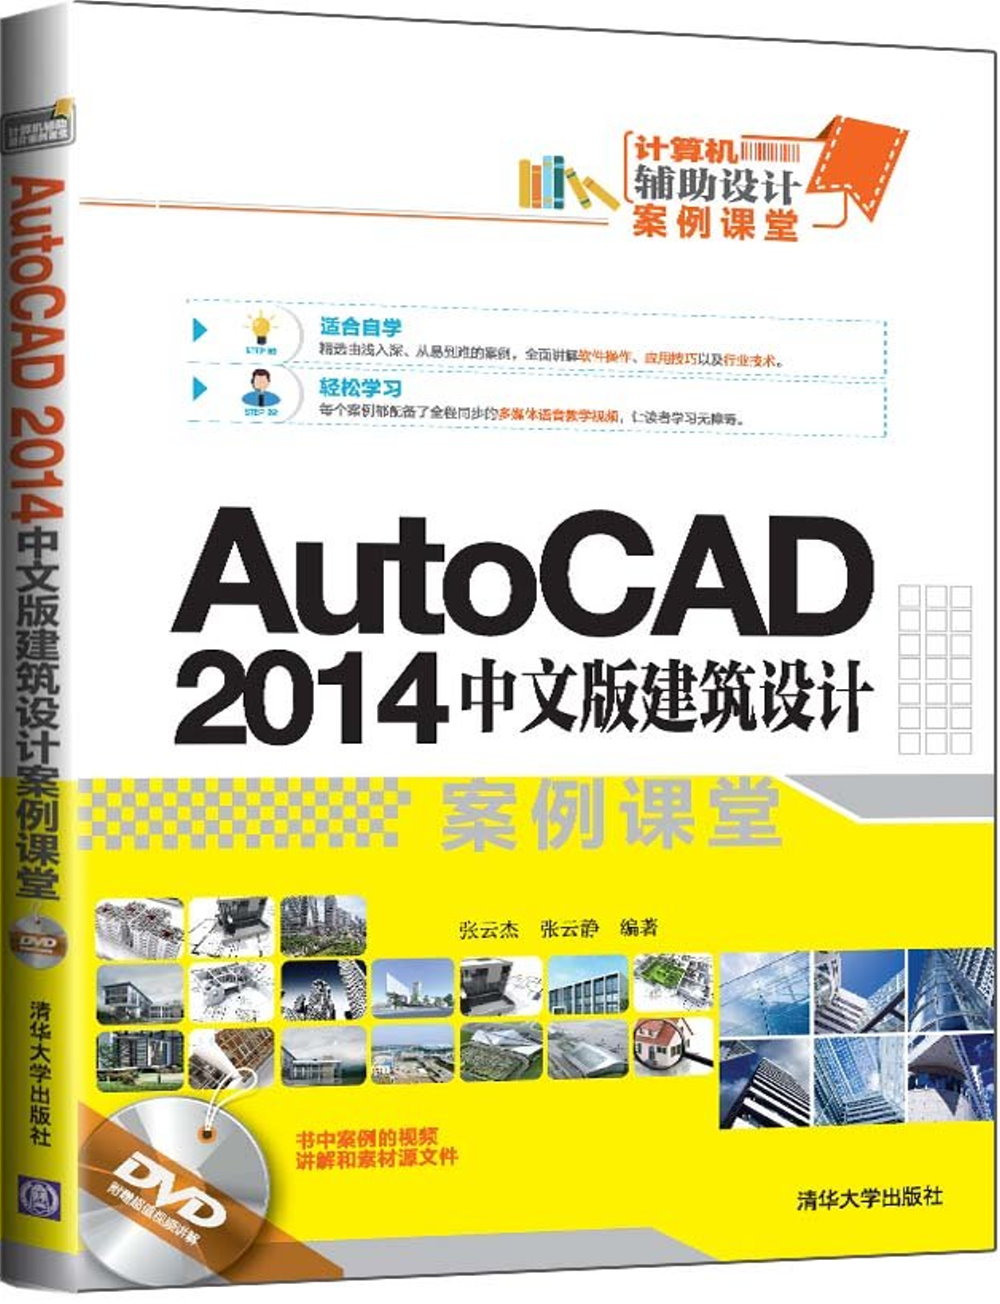 AutoCAD 2014中文版建築設計案例課堂